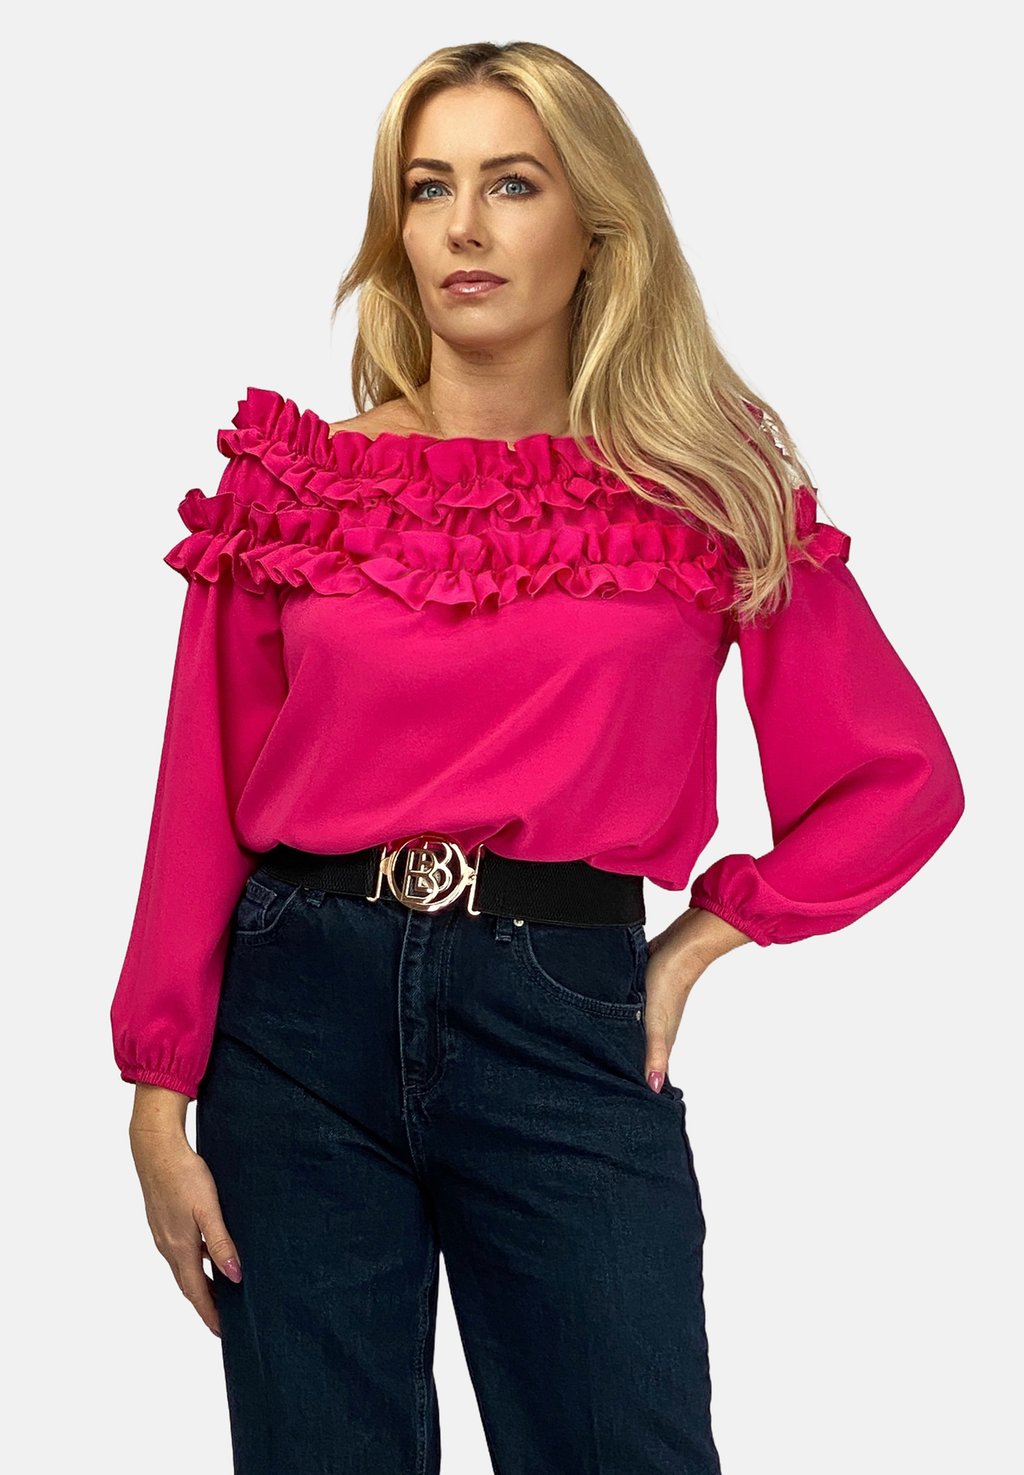 Блузка SPANISH WITH FRILLS REGINA FASHION, цвет mottled pink блузка with button regina fashion цвет fuchsia pink